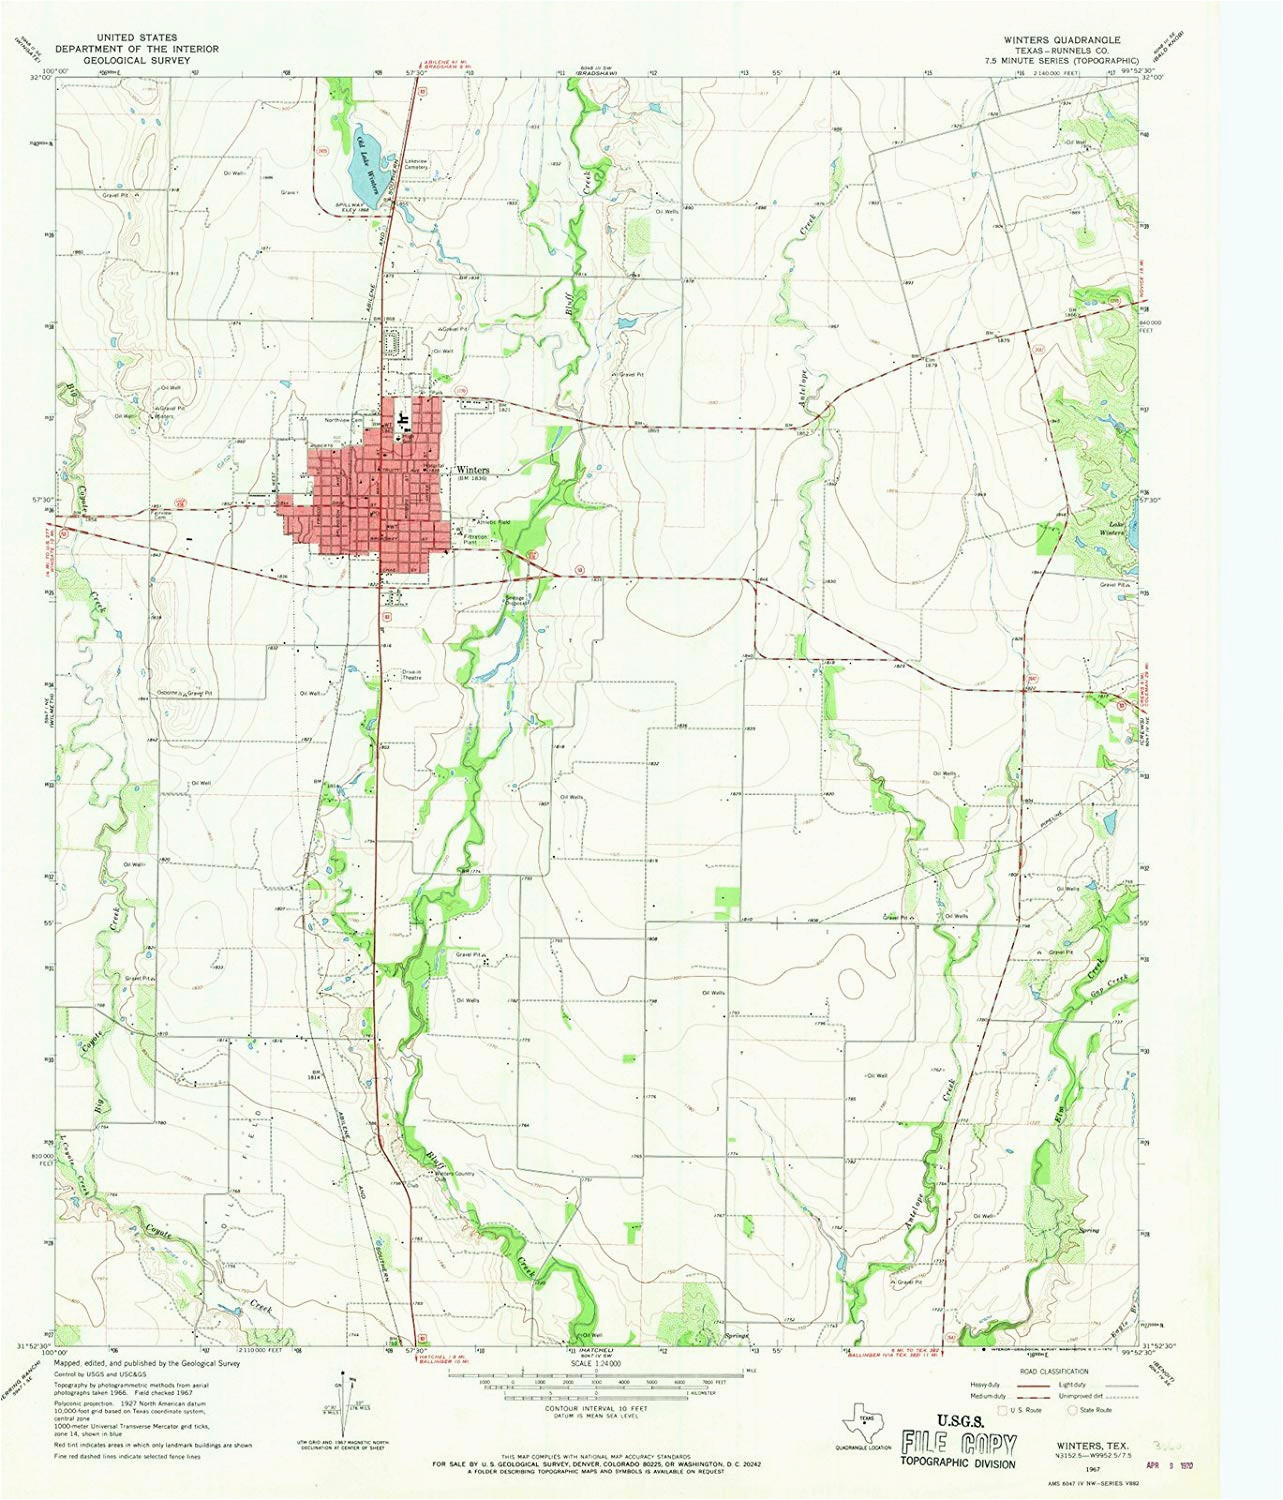 Colorado Maps for Sale Amazon Com Texas Maps 1967 Winters Tx Usgs Historical